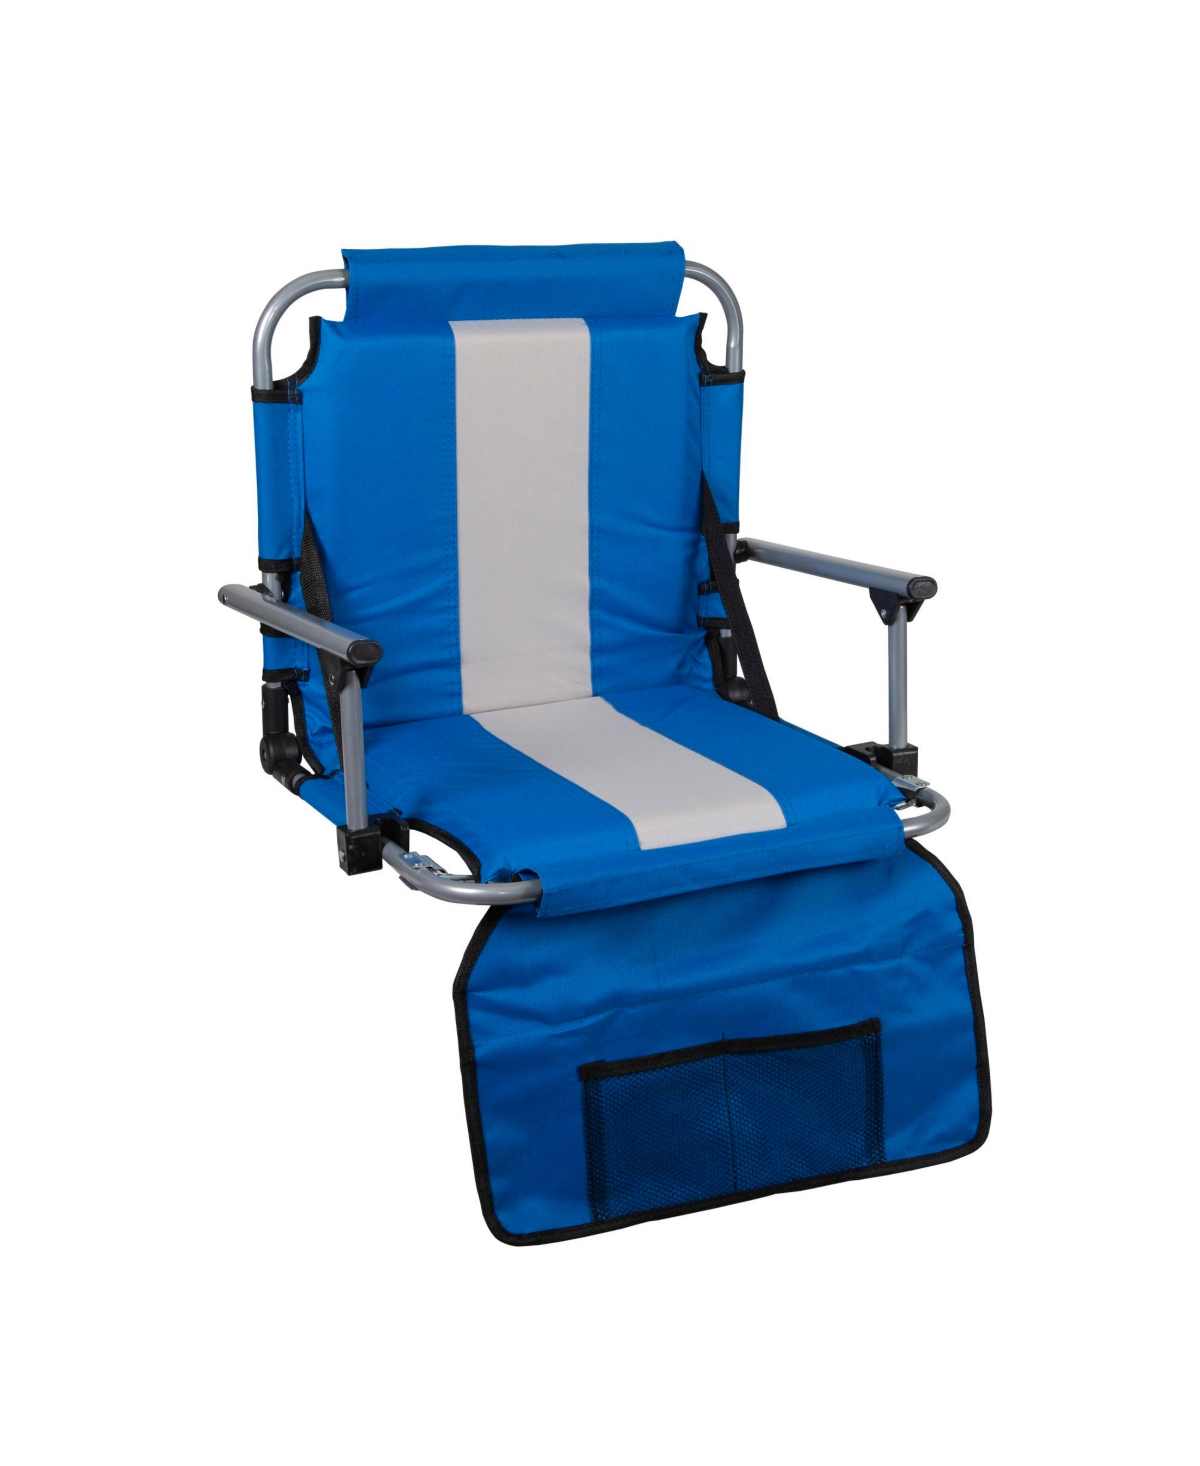 Tubular Frame Folding Stadium Seat with Arms - Blue/Tan - Blue